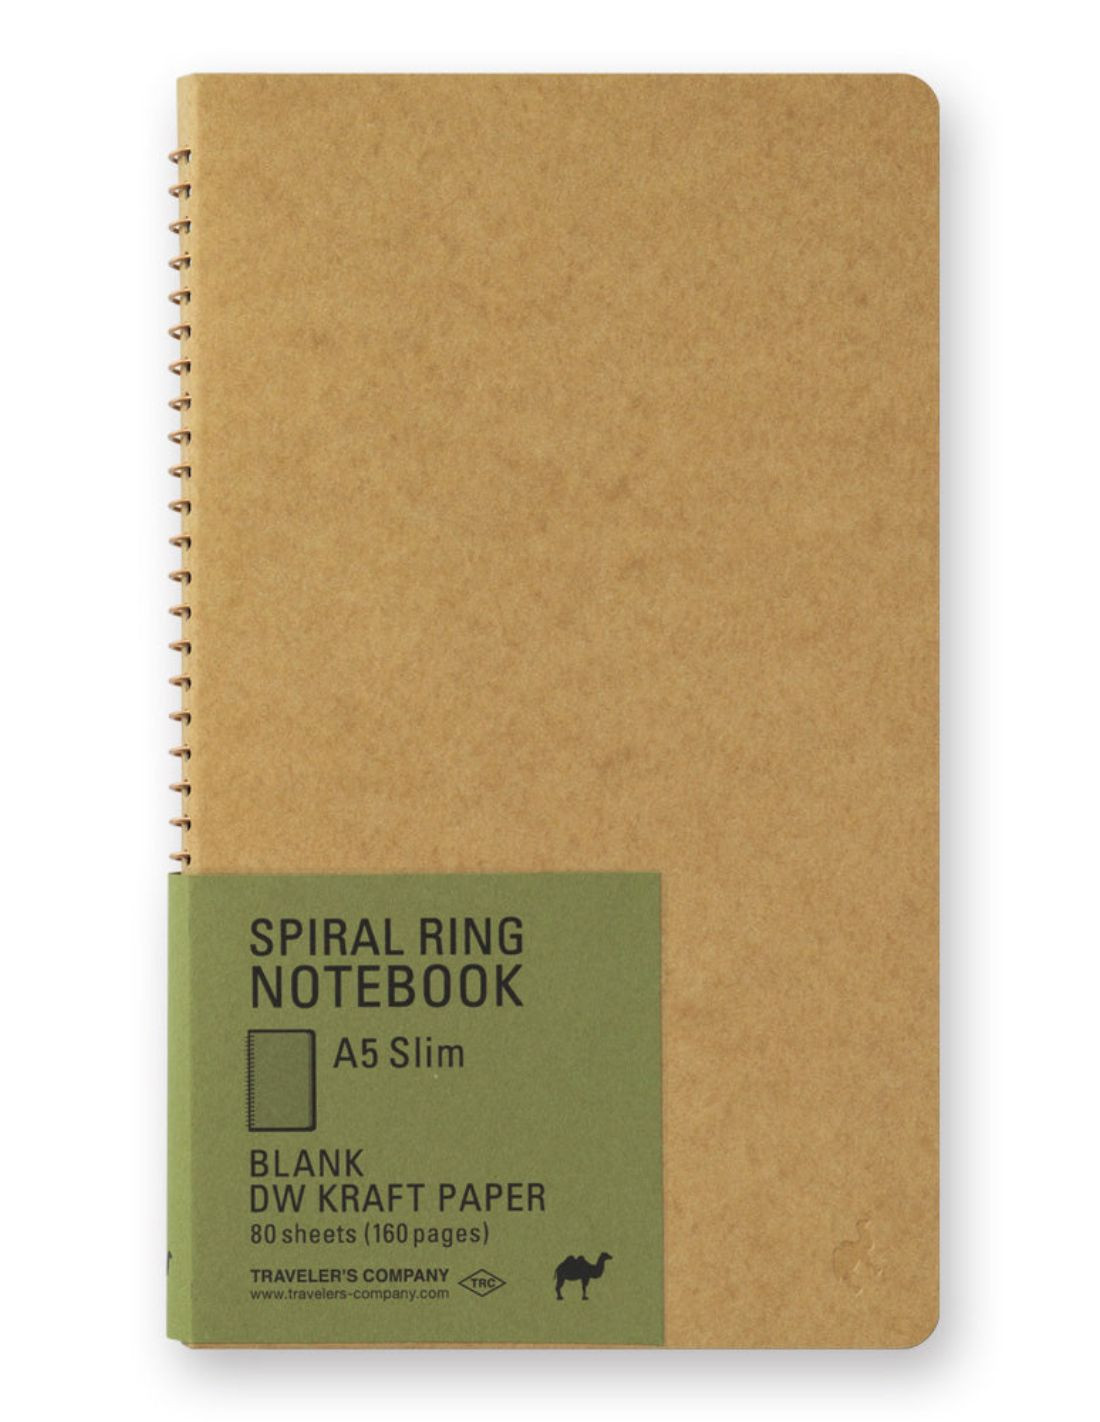 A5 Slim Blank DW Kraft Paper - Spiral Ring Notebook - Traveler's Company